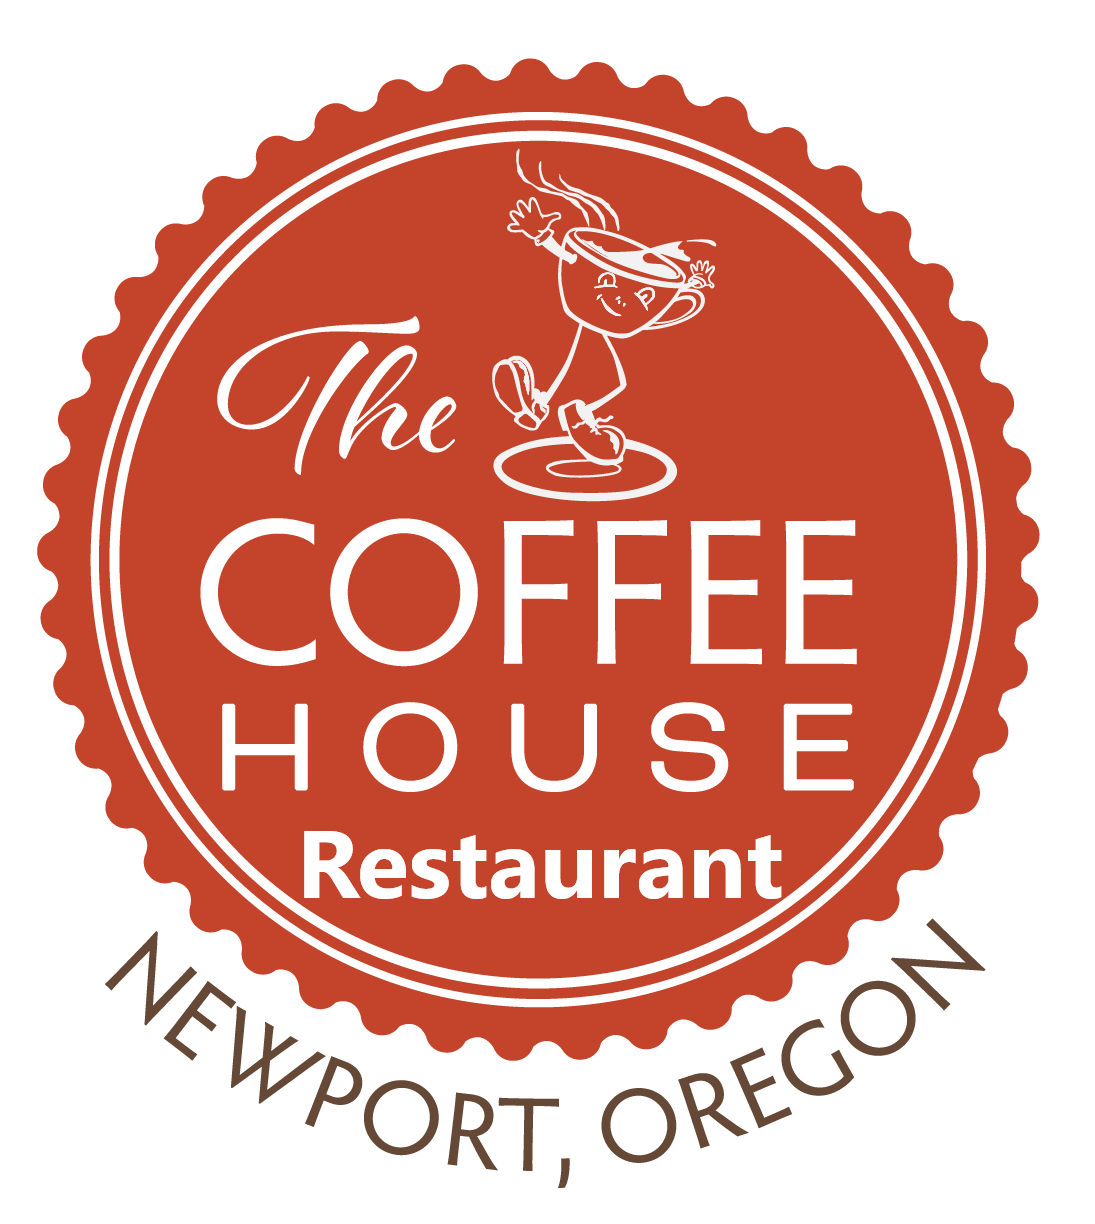 The Coffee House - Newport